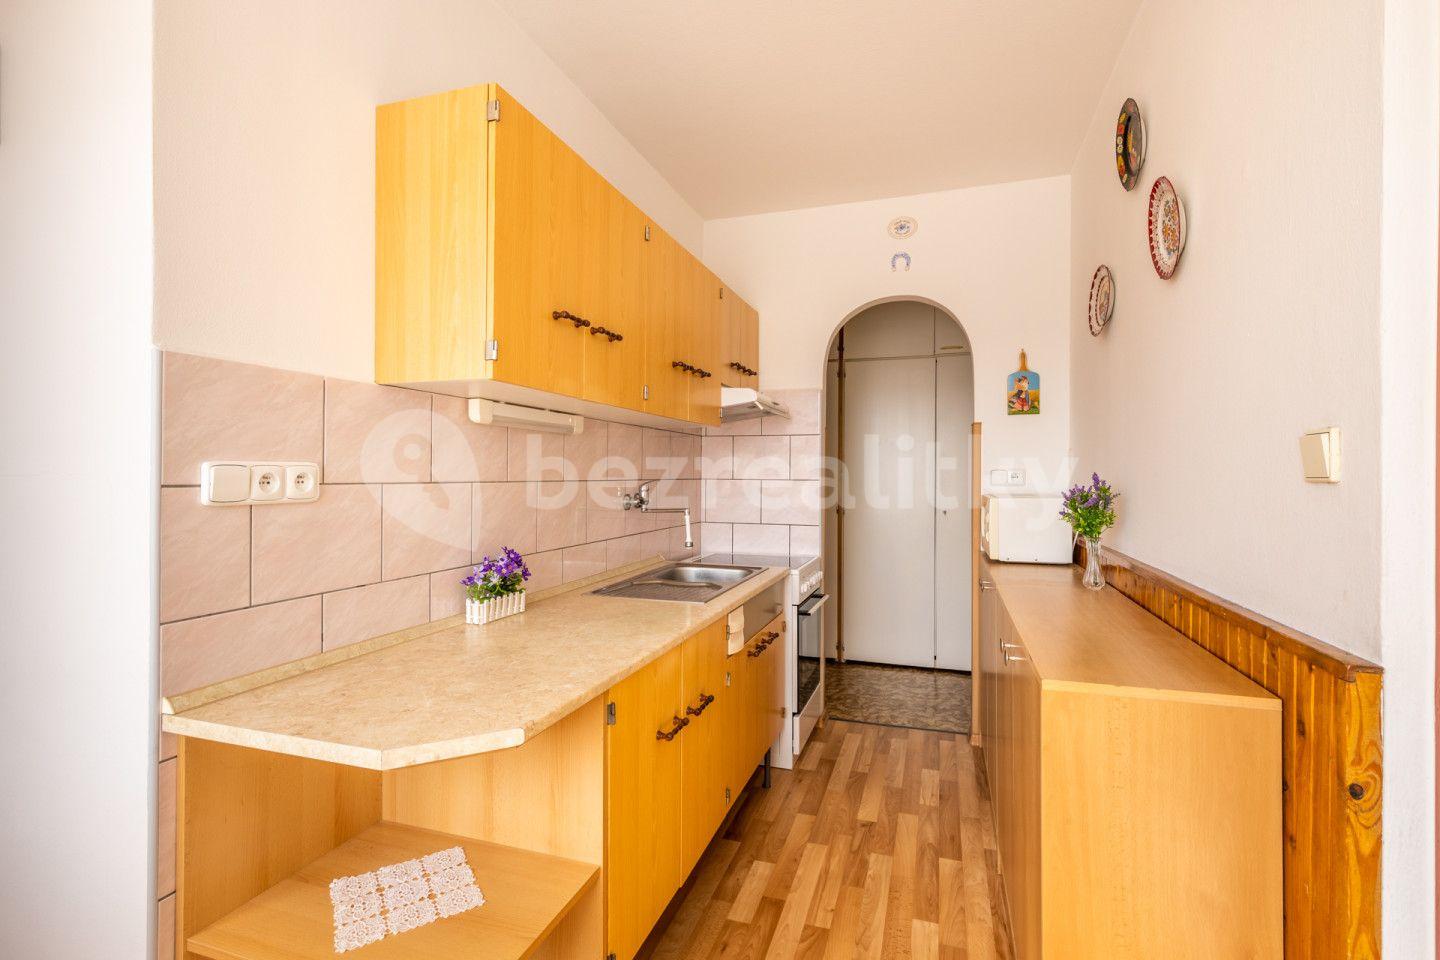 Predaj bytu 3-izbový 74 m², Vimperská, Volyně, Jihočeský kraj